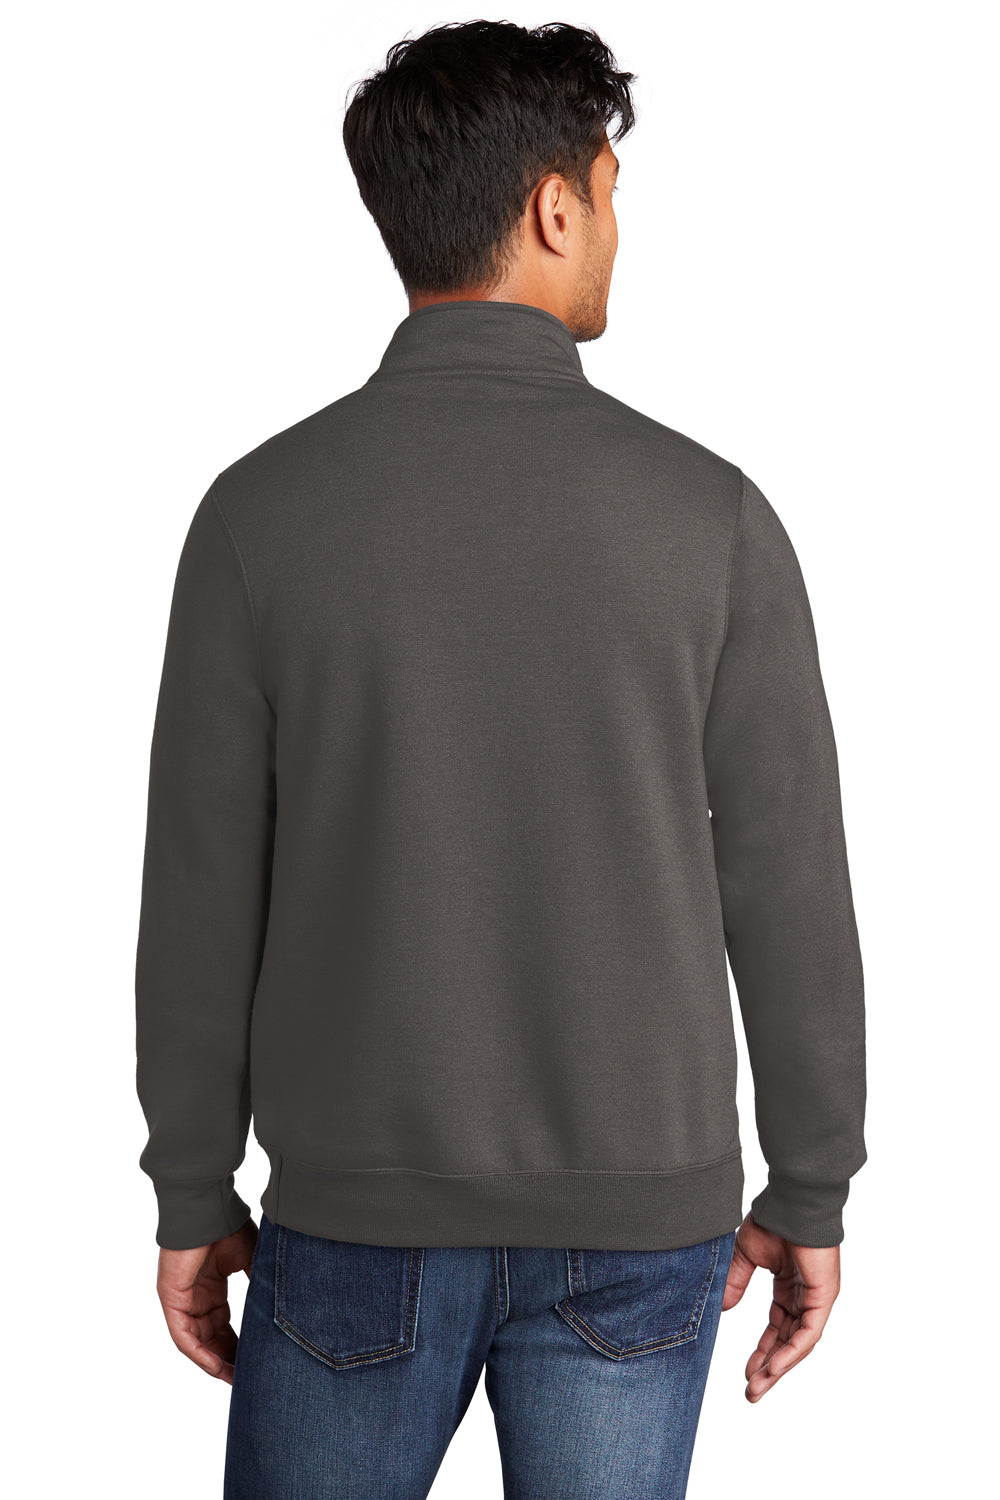 Port & Company Mens Core Fleece 1/4 Zip Sweatshirt Charcoal Grey Side